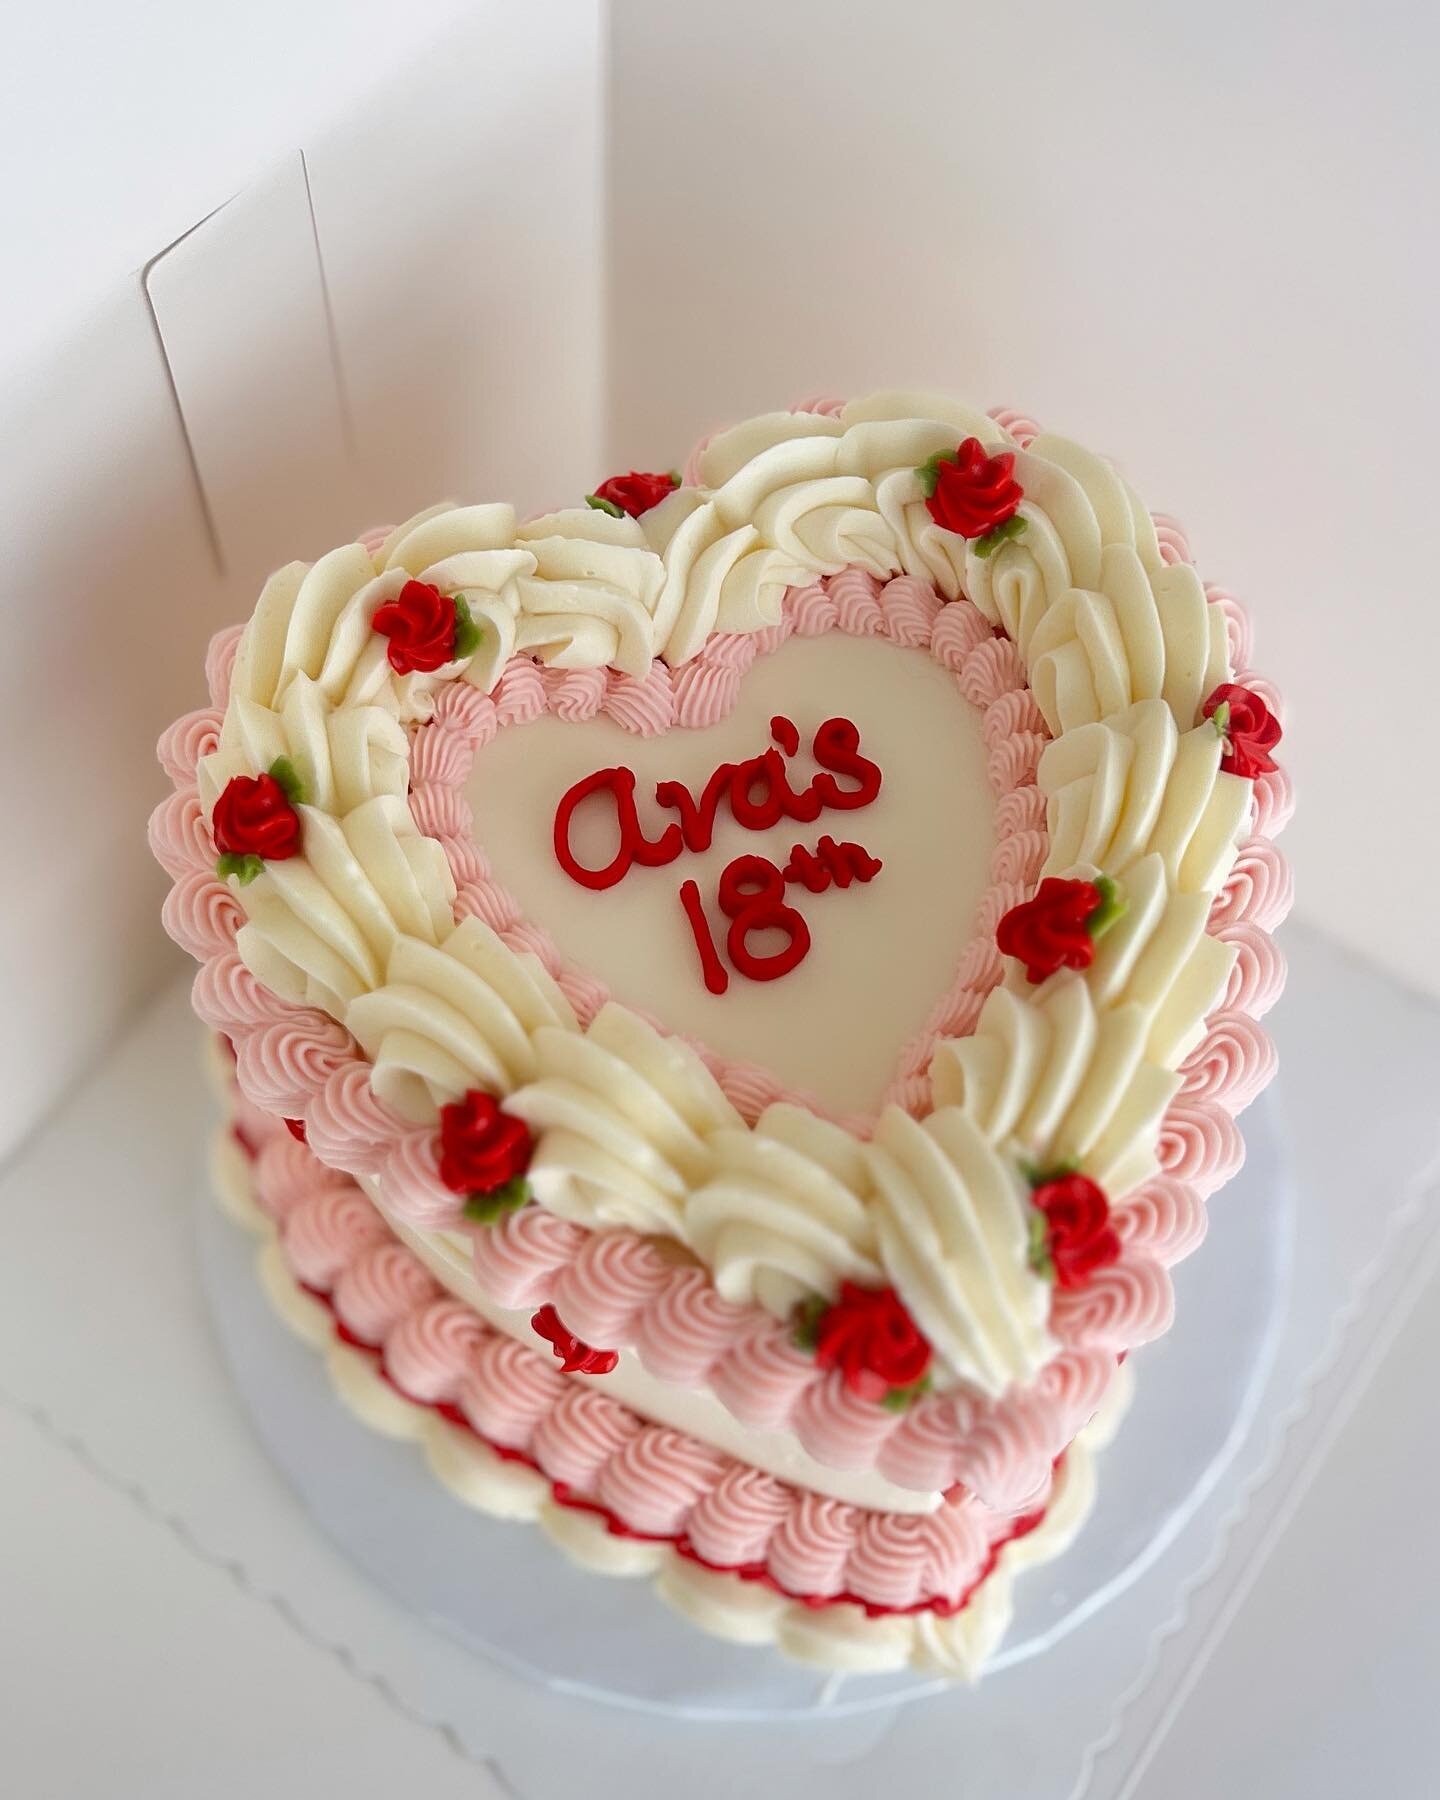 Ava 🌹✨
.
.
#heartcake #vintagecake #vintageheartcake #frillycake #rosebudcakes #rosebuds #retrocakes #cakedesign #cutecakes #buttercreamdesign cakecakecake #cakesofinstagram #strawberrycake #strawberrymoussecake #customcakesla #lacakes #longbeachcak